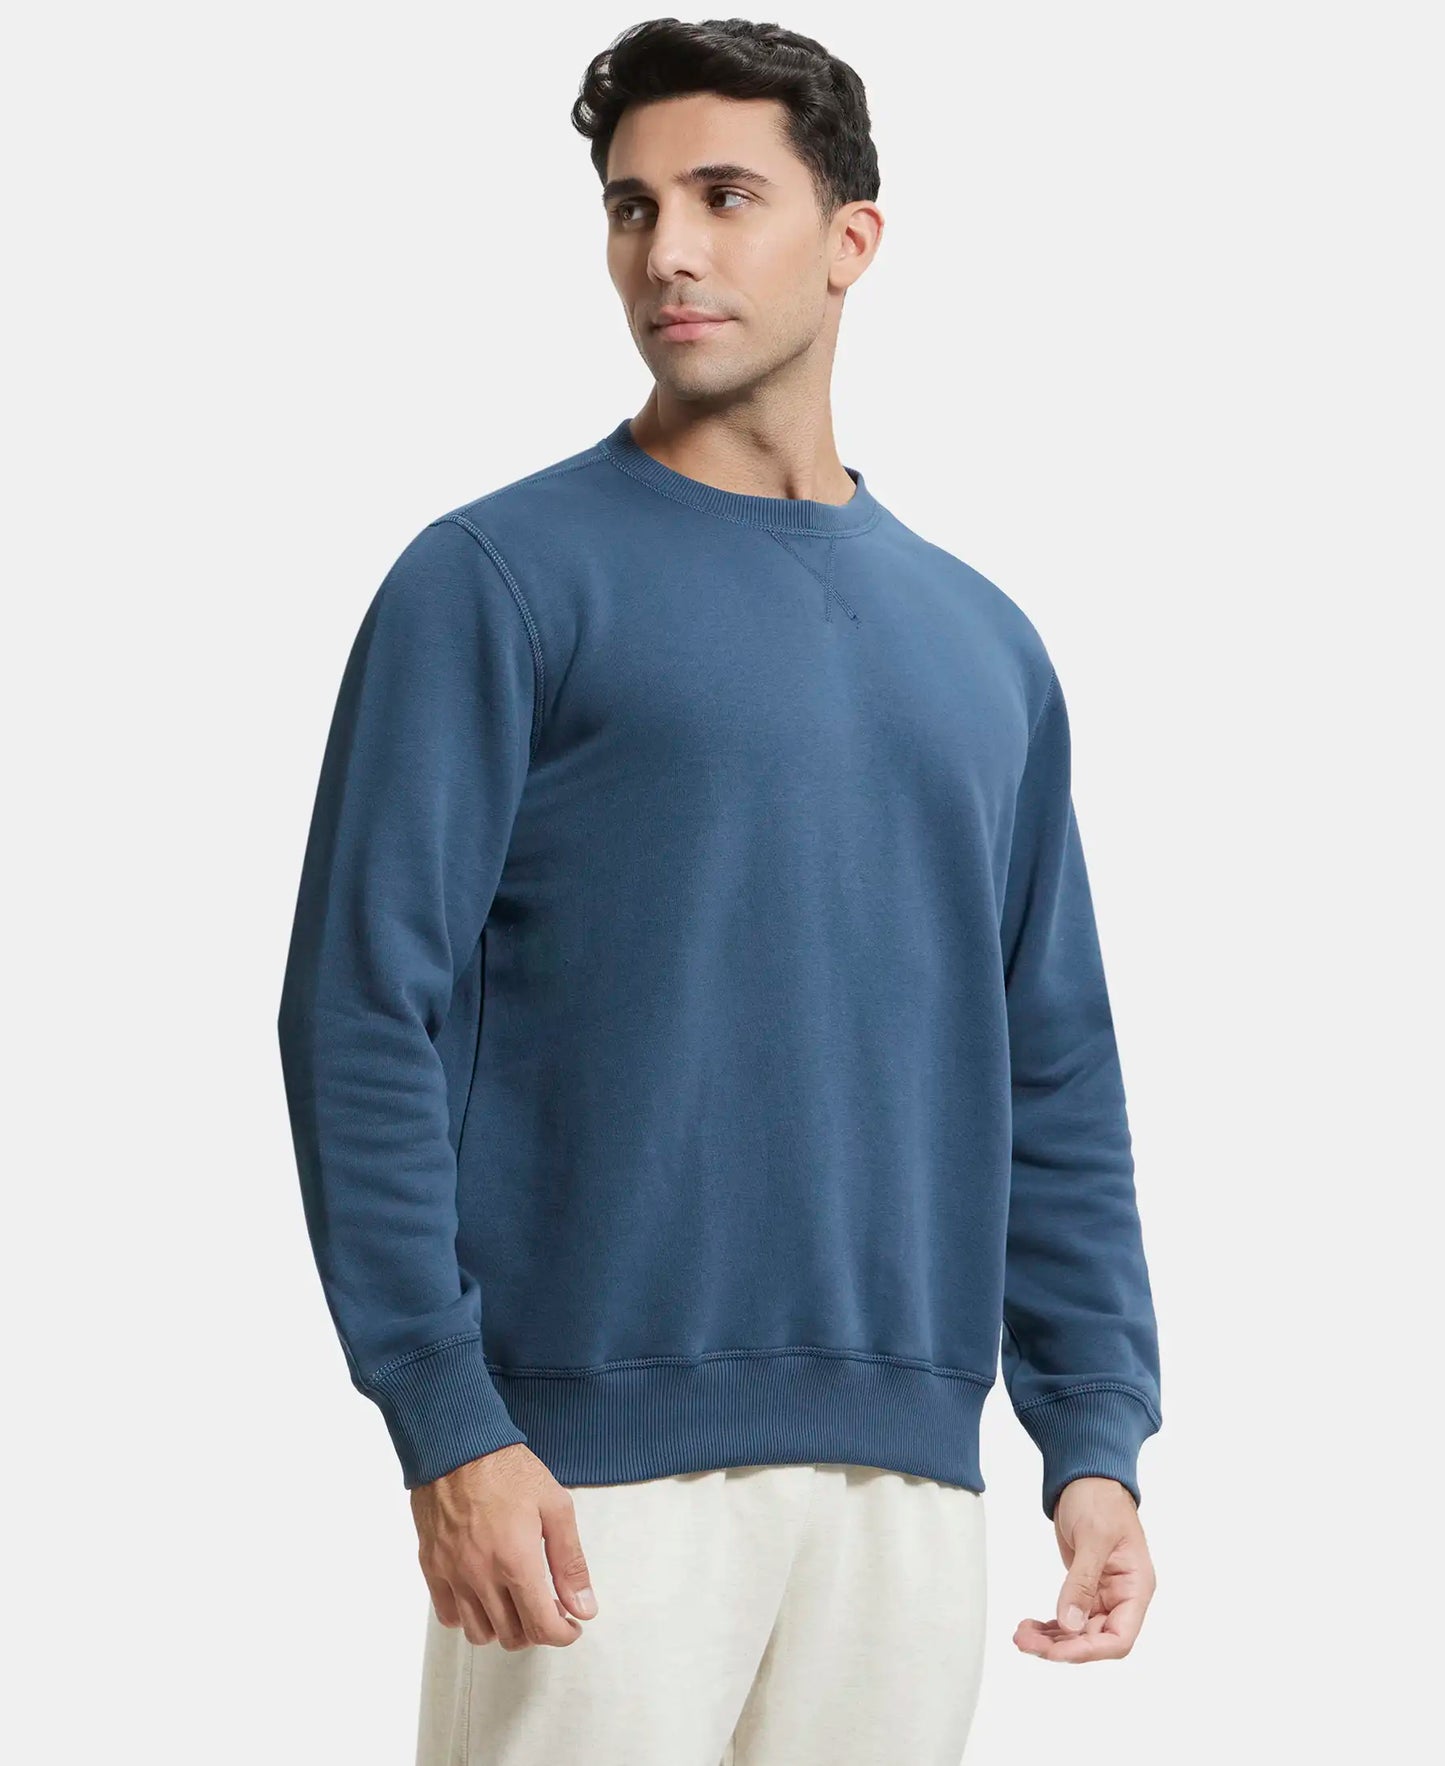 Super Combed Cotton Rich Fleece Sweatshirt with StayWarm Technology - Mid Night Navy-2